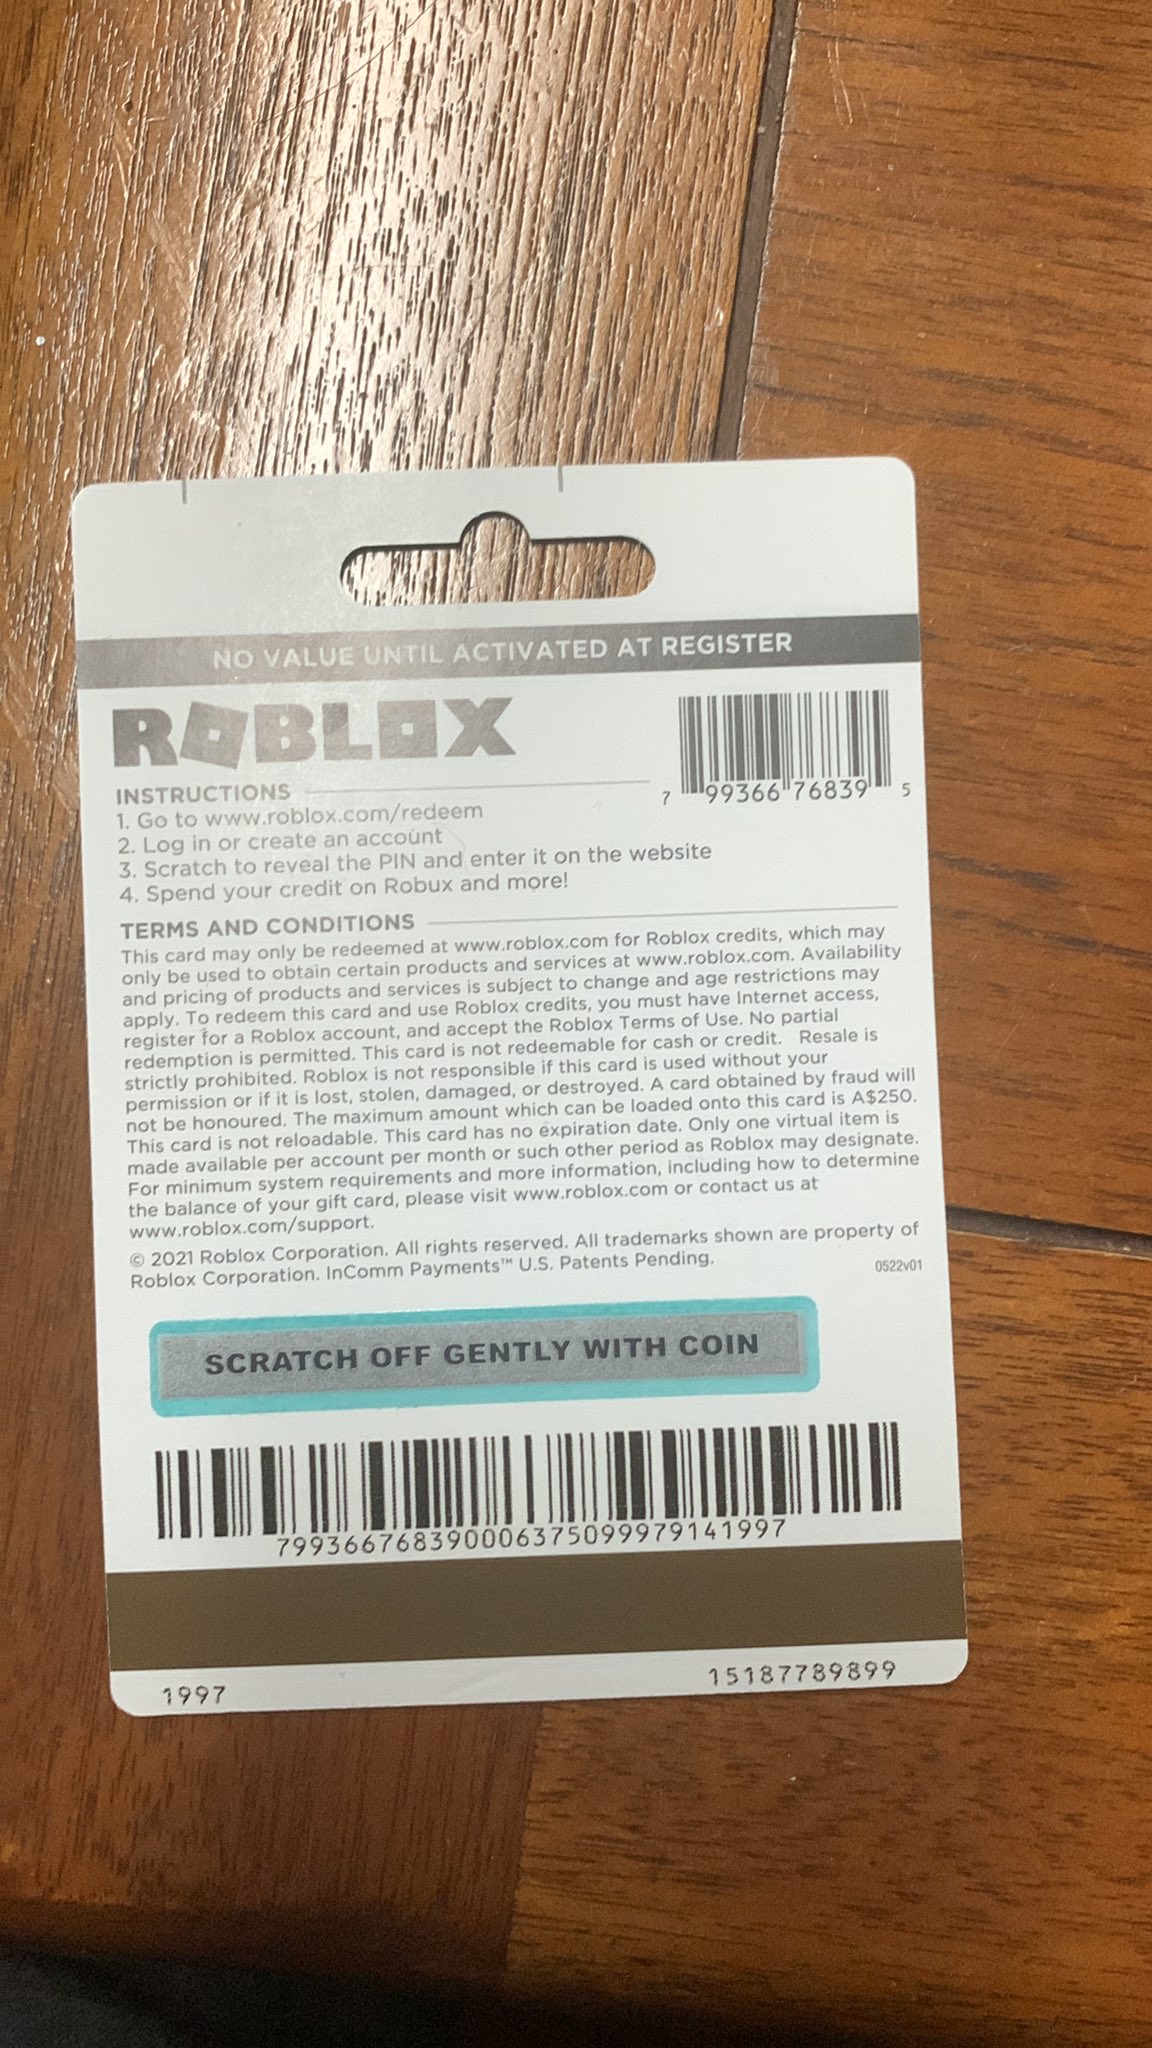 wwwroblox.com redeem - Simple Steps to Redeem Roblox Gift Card